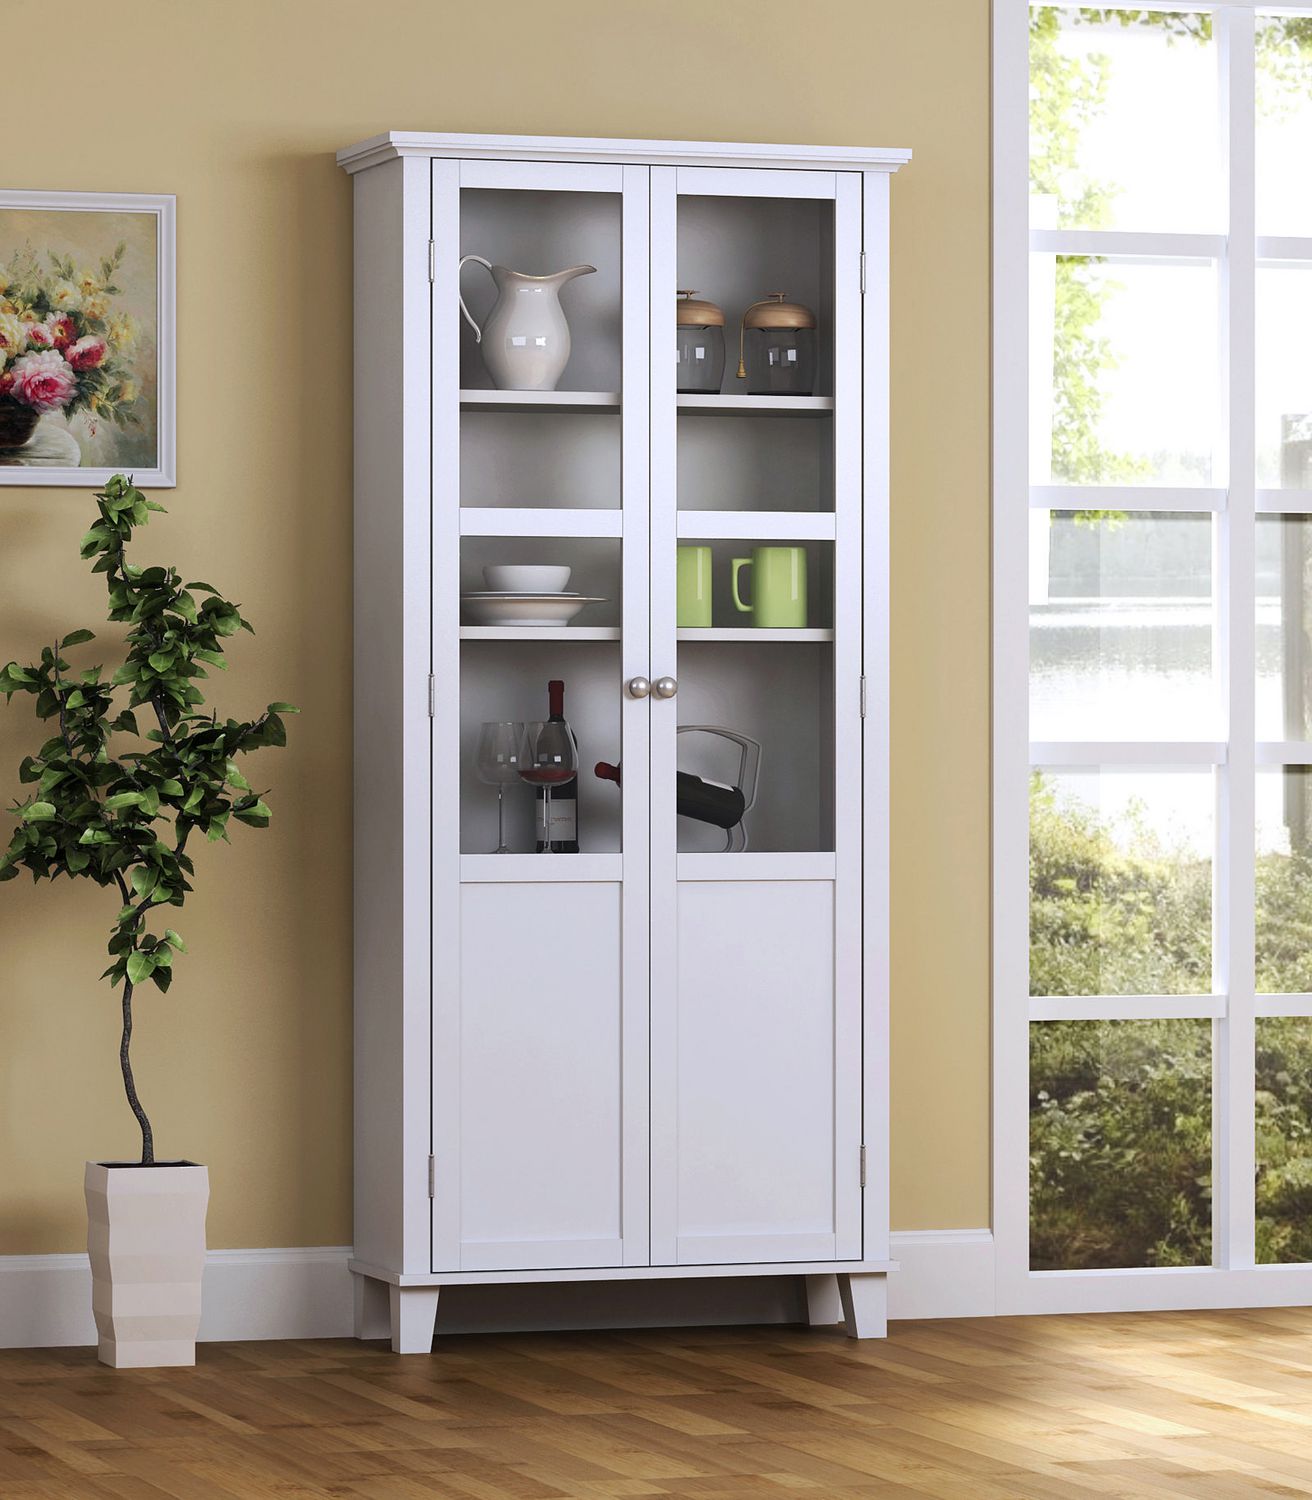 5 Shelf Storage Cabinet With Glass Doors Canada - Kitchen Storage Cabinets With Glass Doors And Shelves